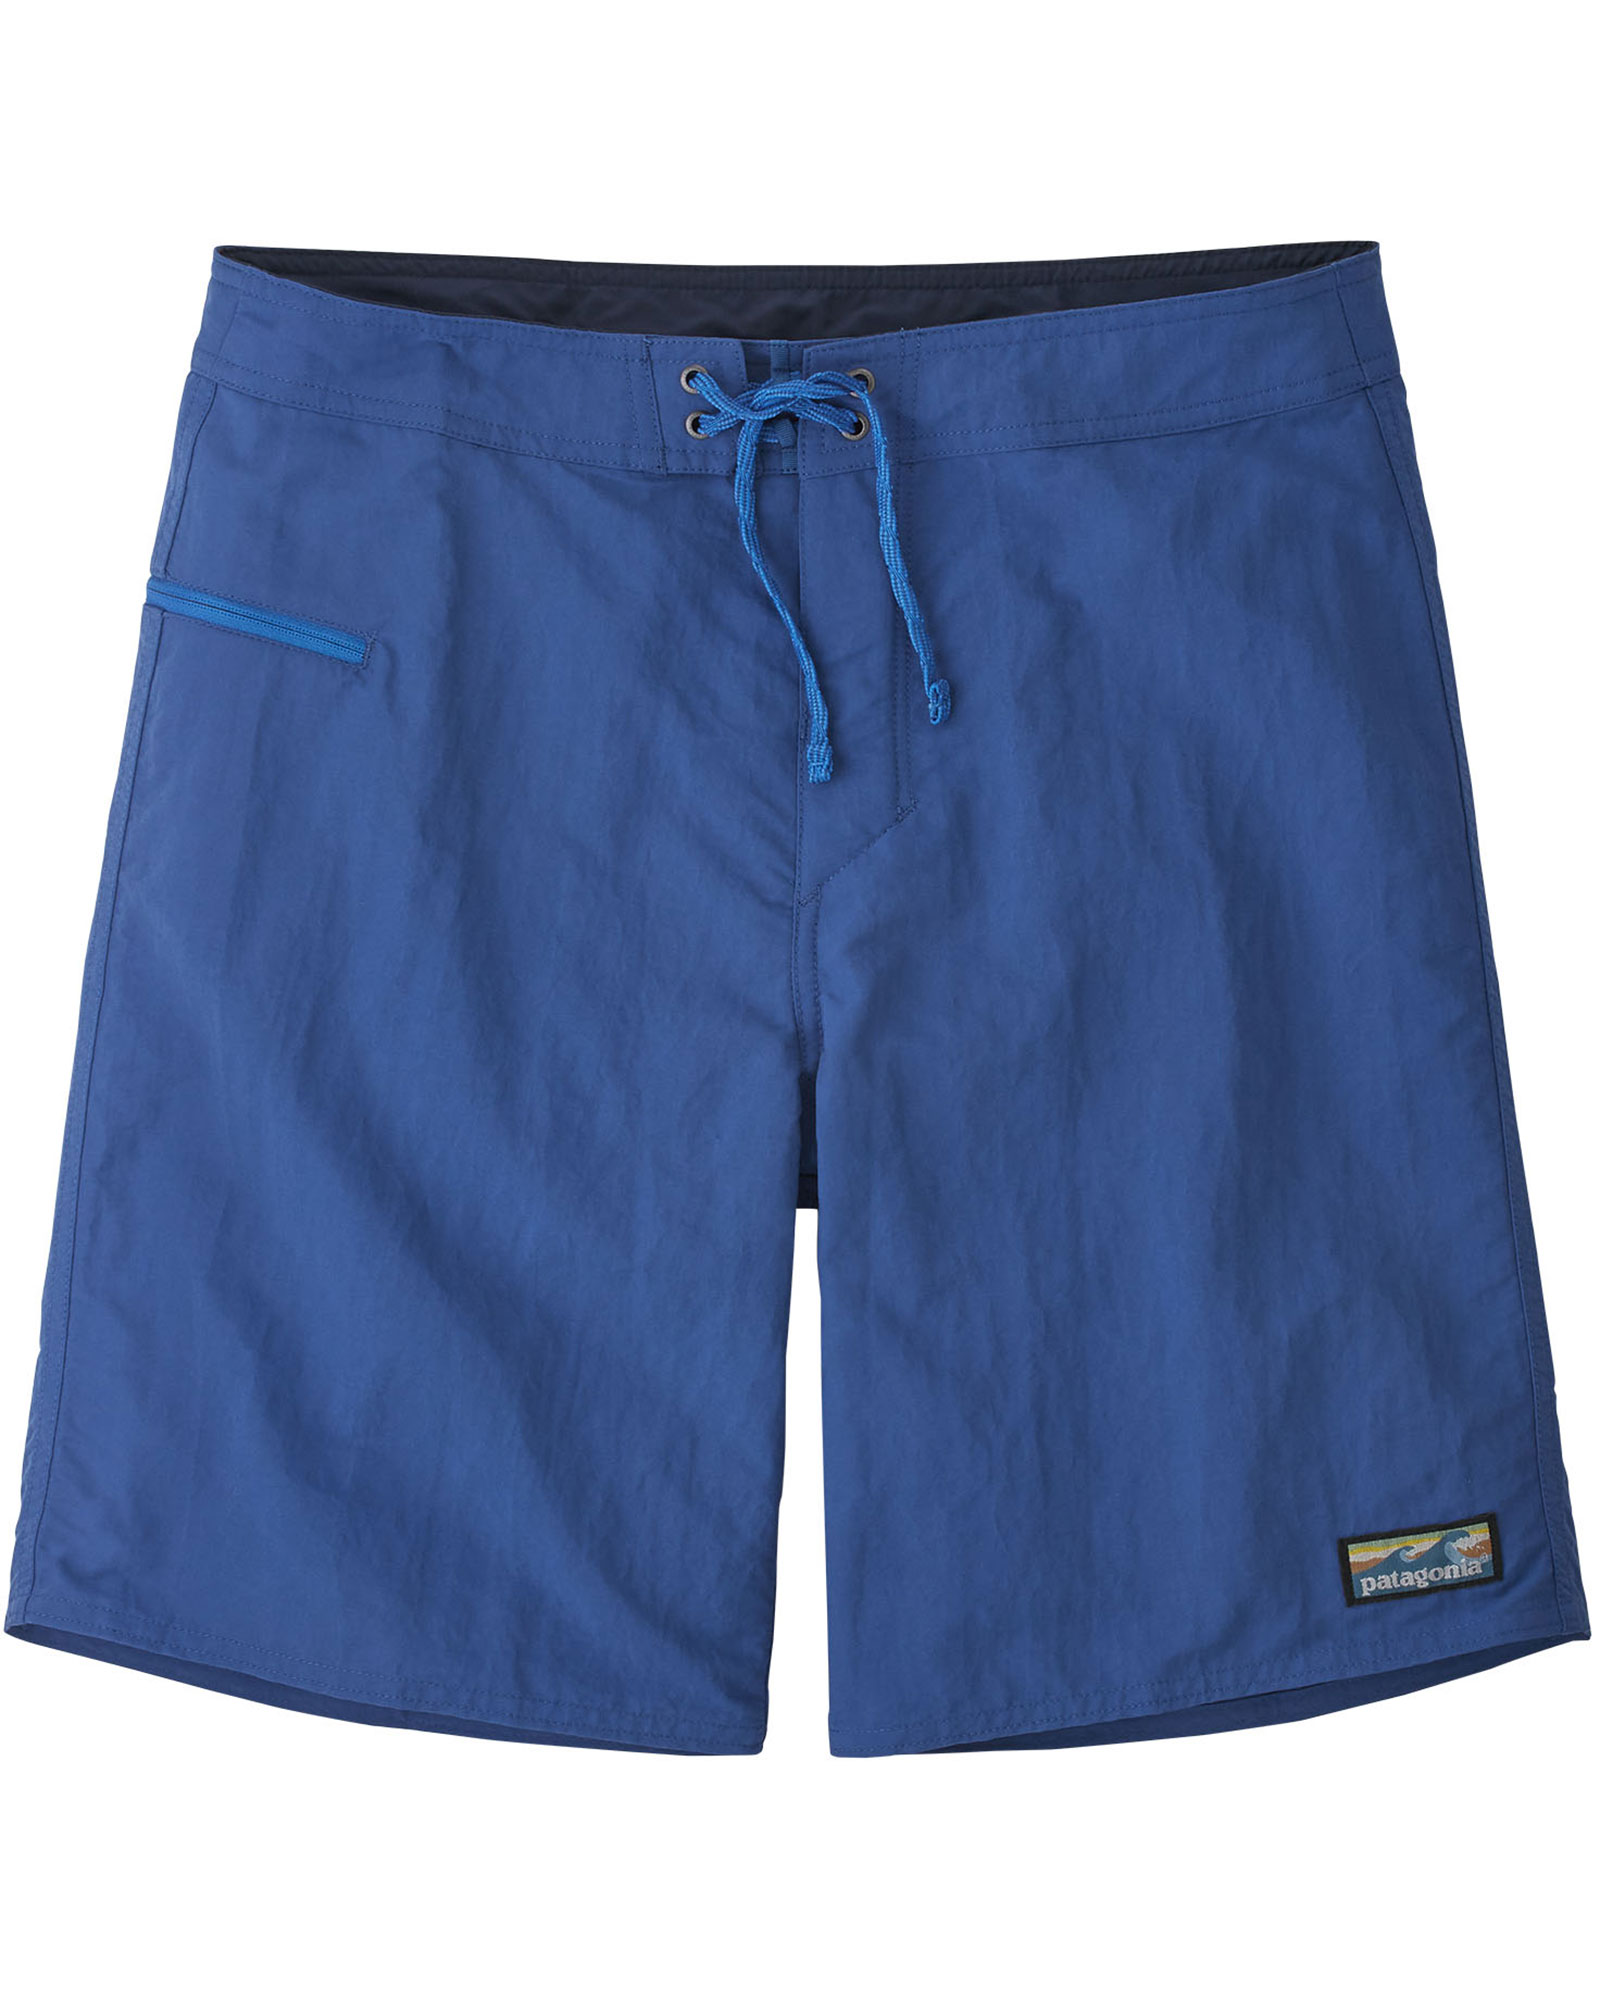 Patagonia Wavefarer Men’s 19" Board Shorts - Superior Blue 34"